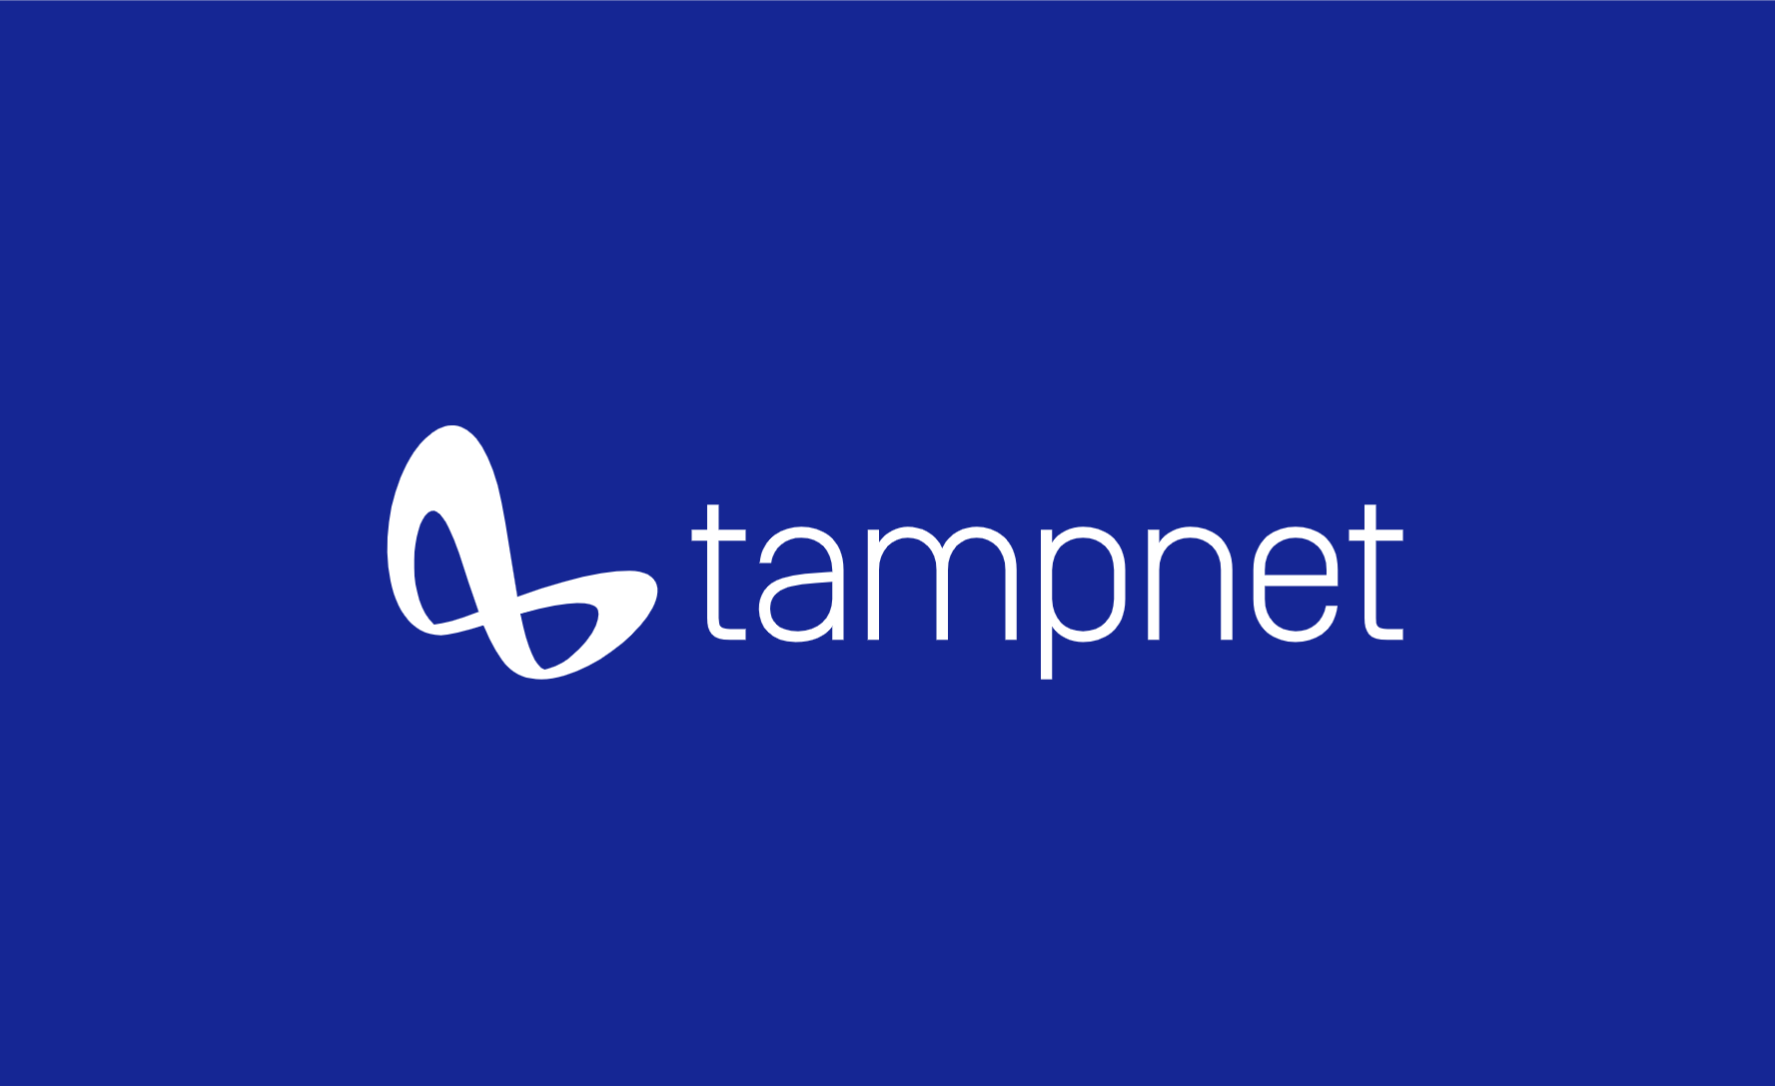 Tampnet AS logo